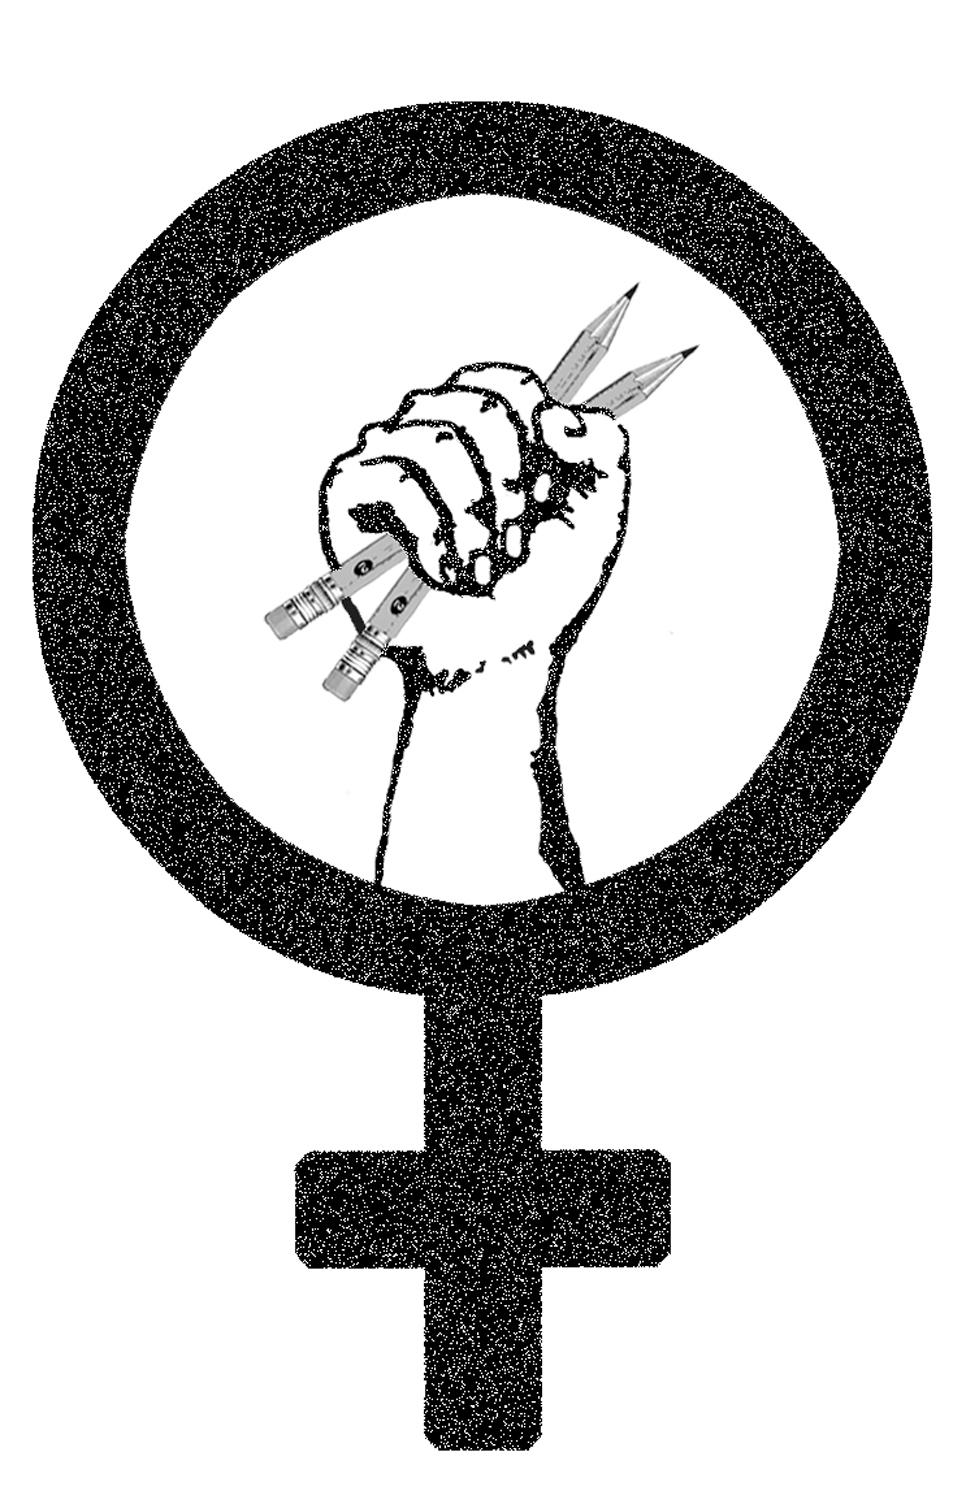 black female sex symbol with fist inside holding pencils